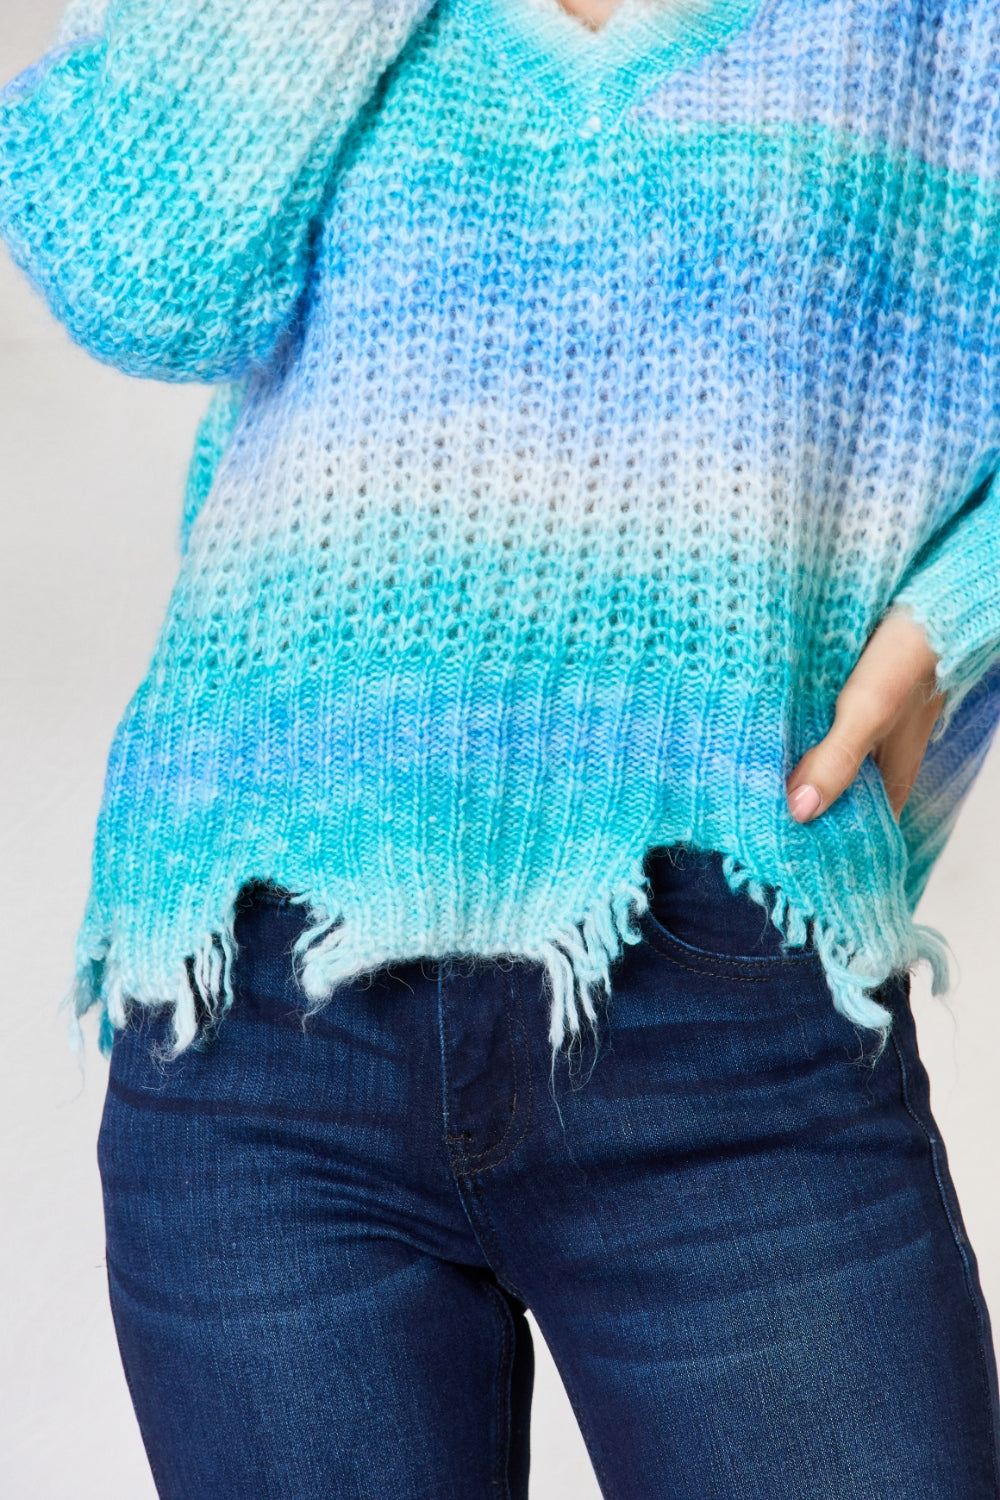 BiBi Sweater - Tie Dye Frayed - Inspired Eye Boutique